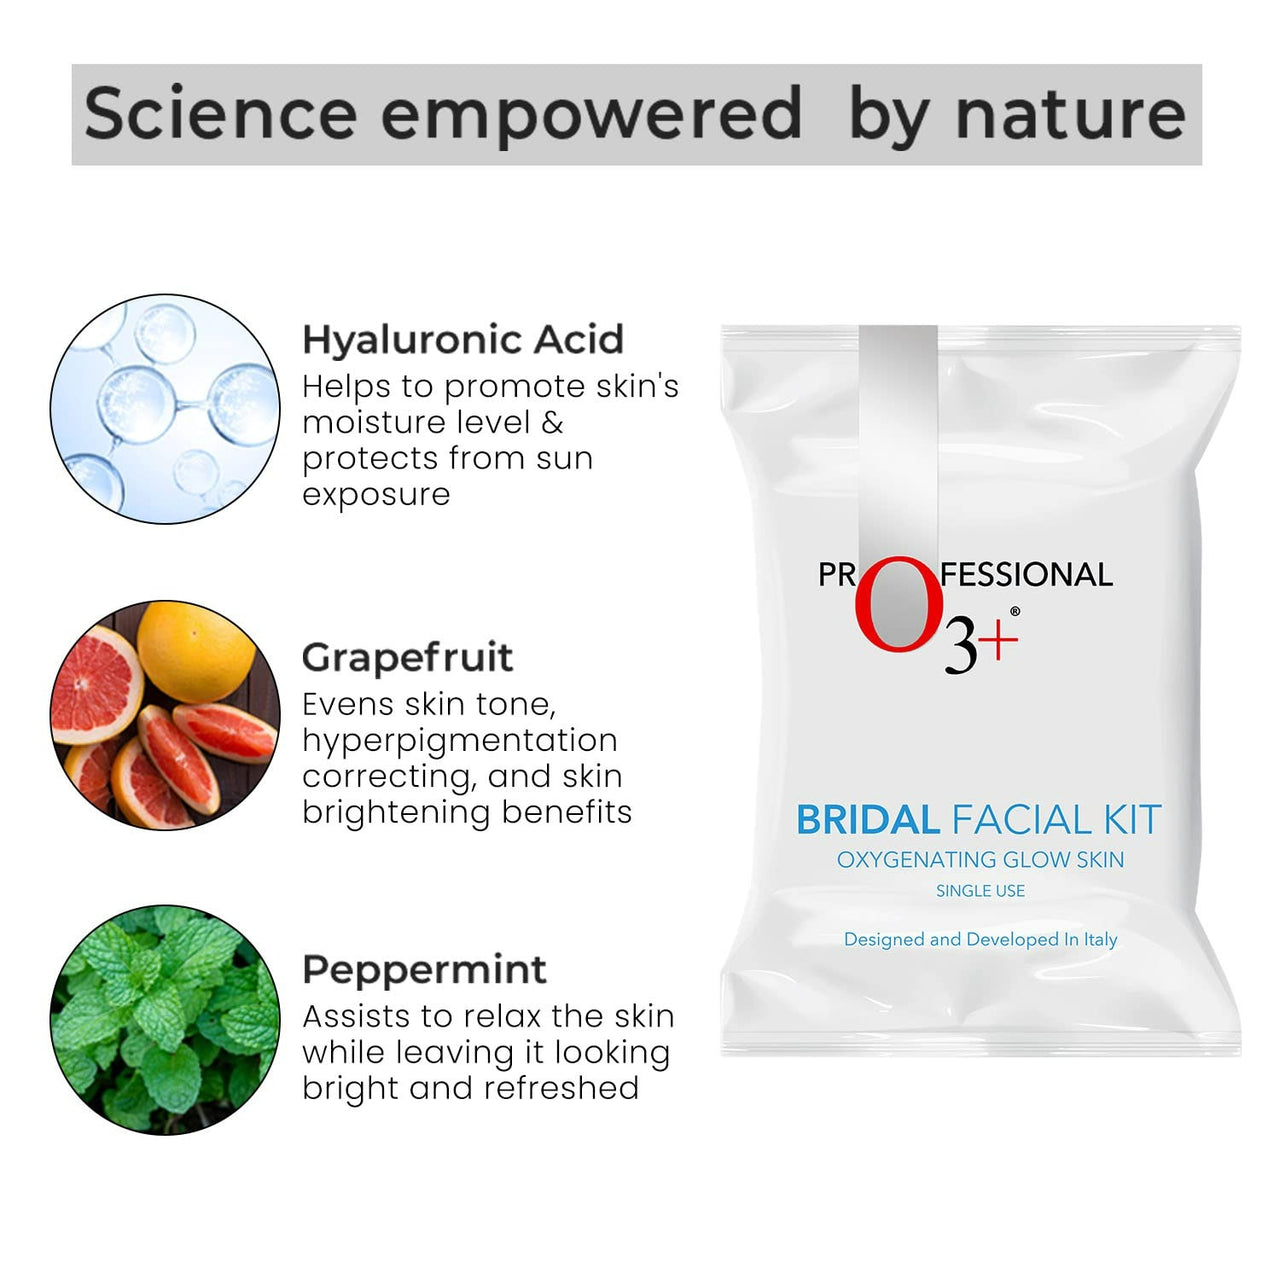 Professional O3+ Bridal Facial Kit Oxygenating Glow Skin